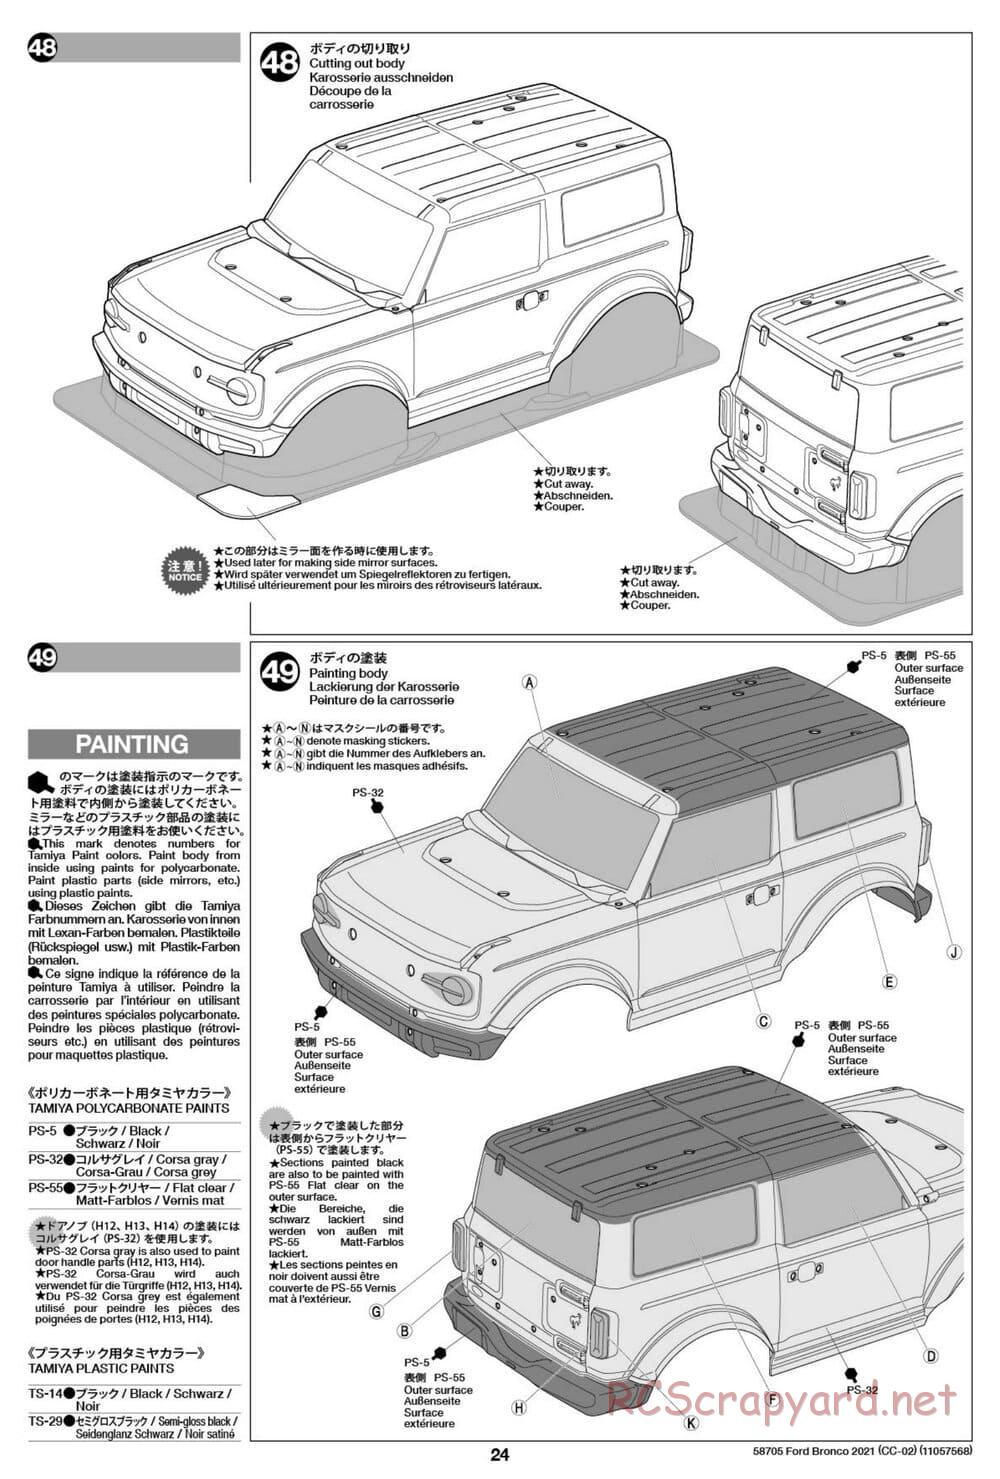 Tamiya - Ford Bronco 2021 - CC-02 Chassis - Manual - Page 24